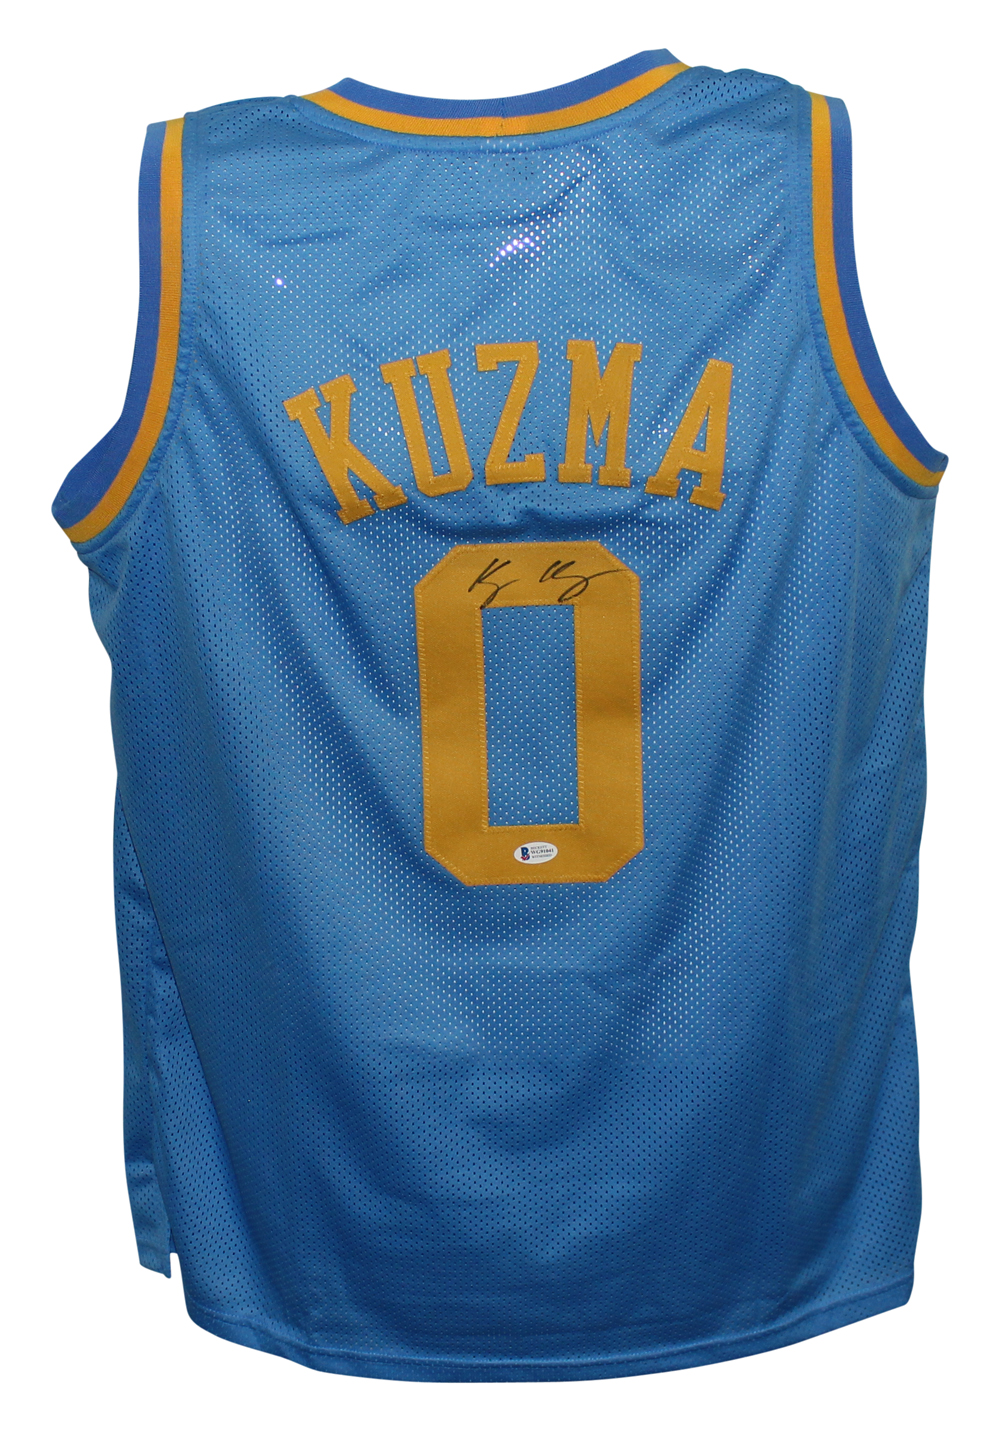 Kyle Kuzma Autographed/Signed Pro Style Baby Blue XL Jersey BAS